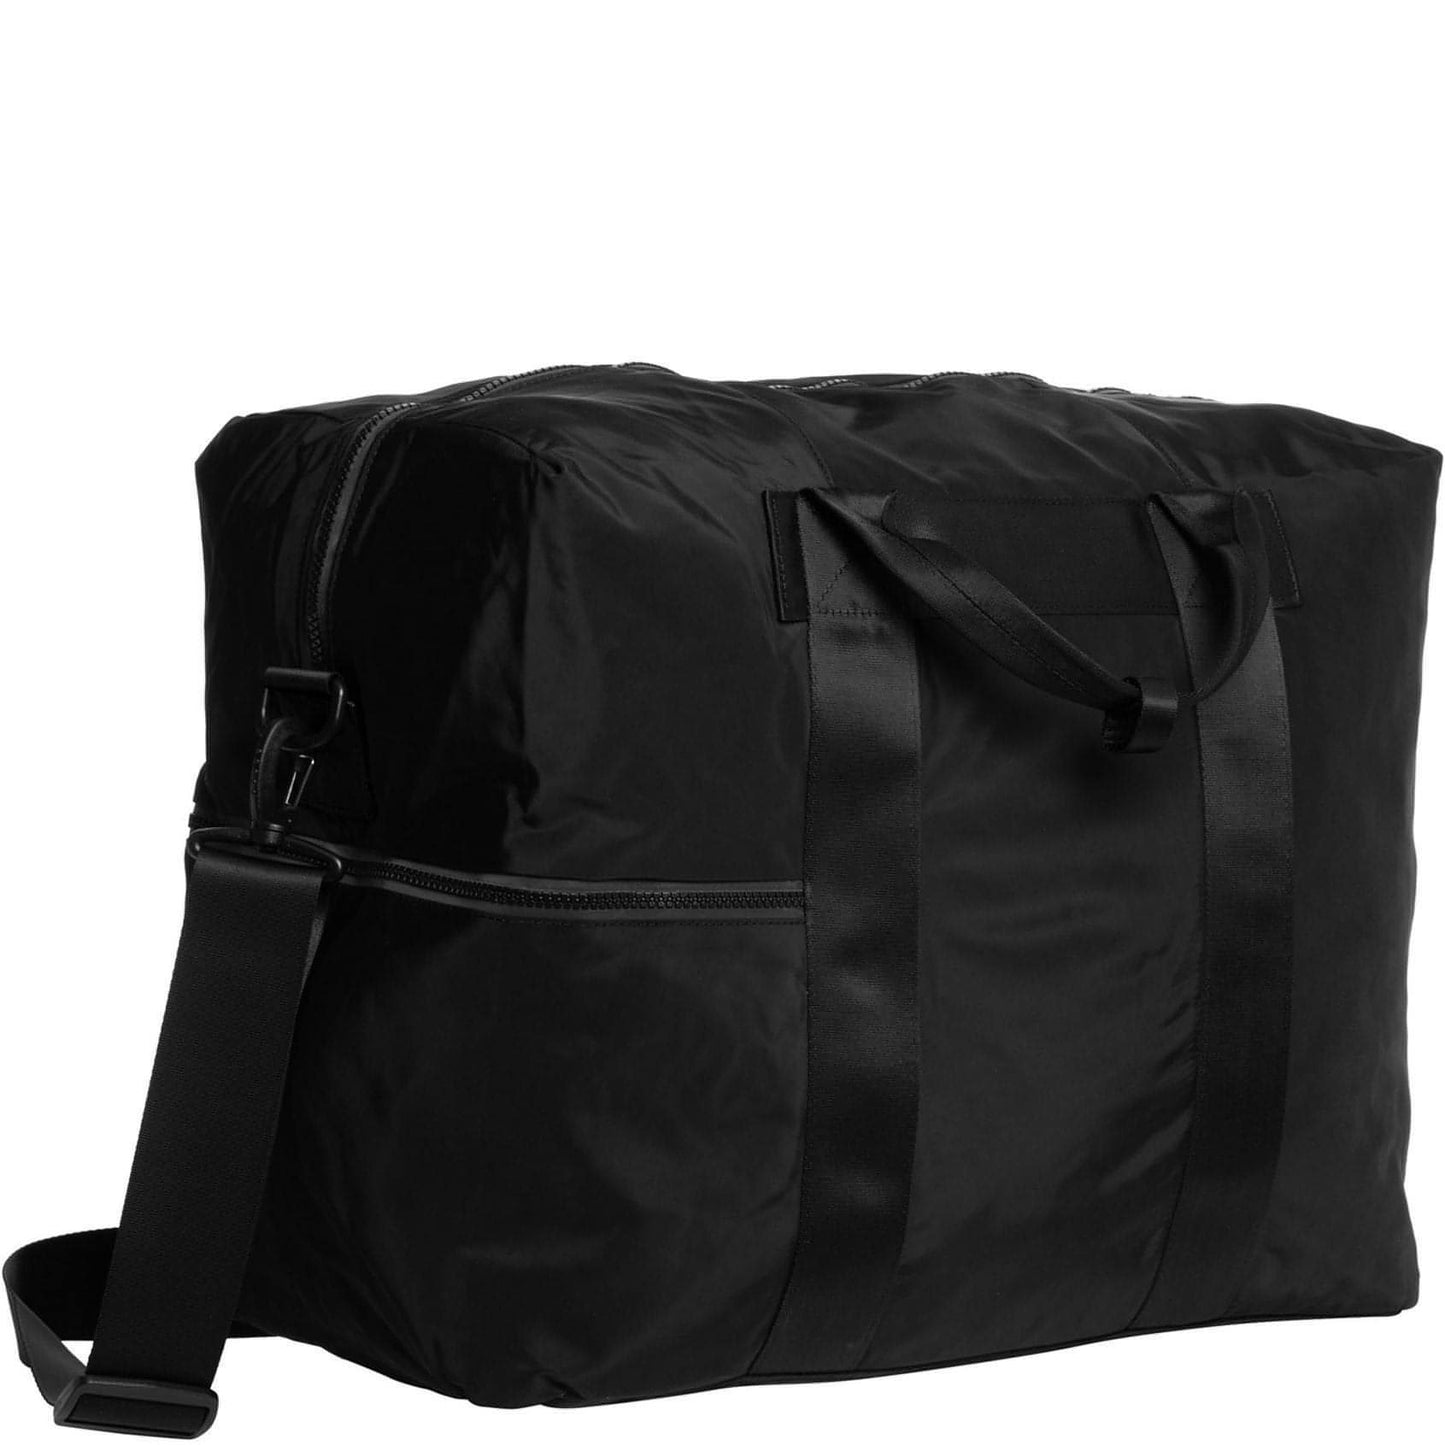 EA7 vyriška/moteriška juoda tašė Gym bag